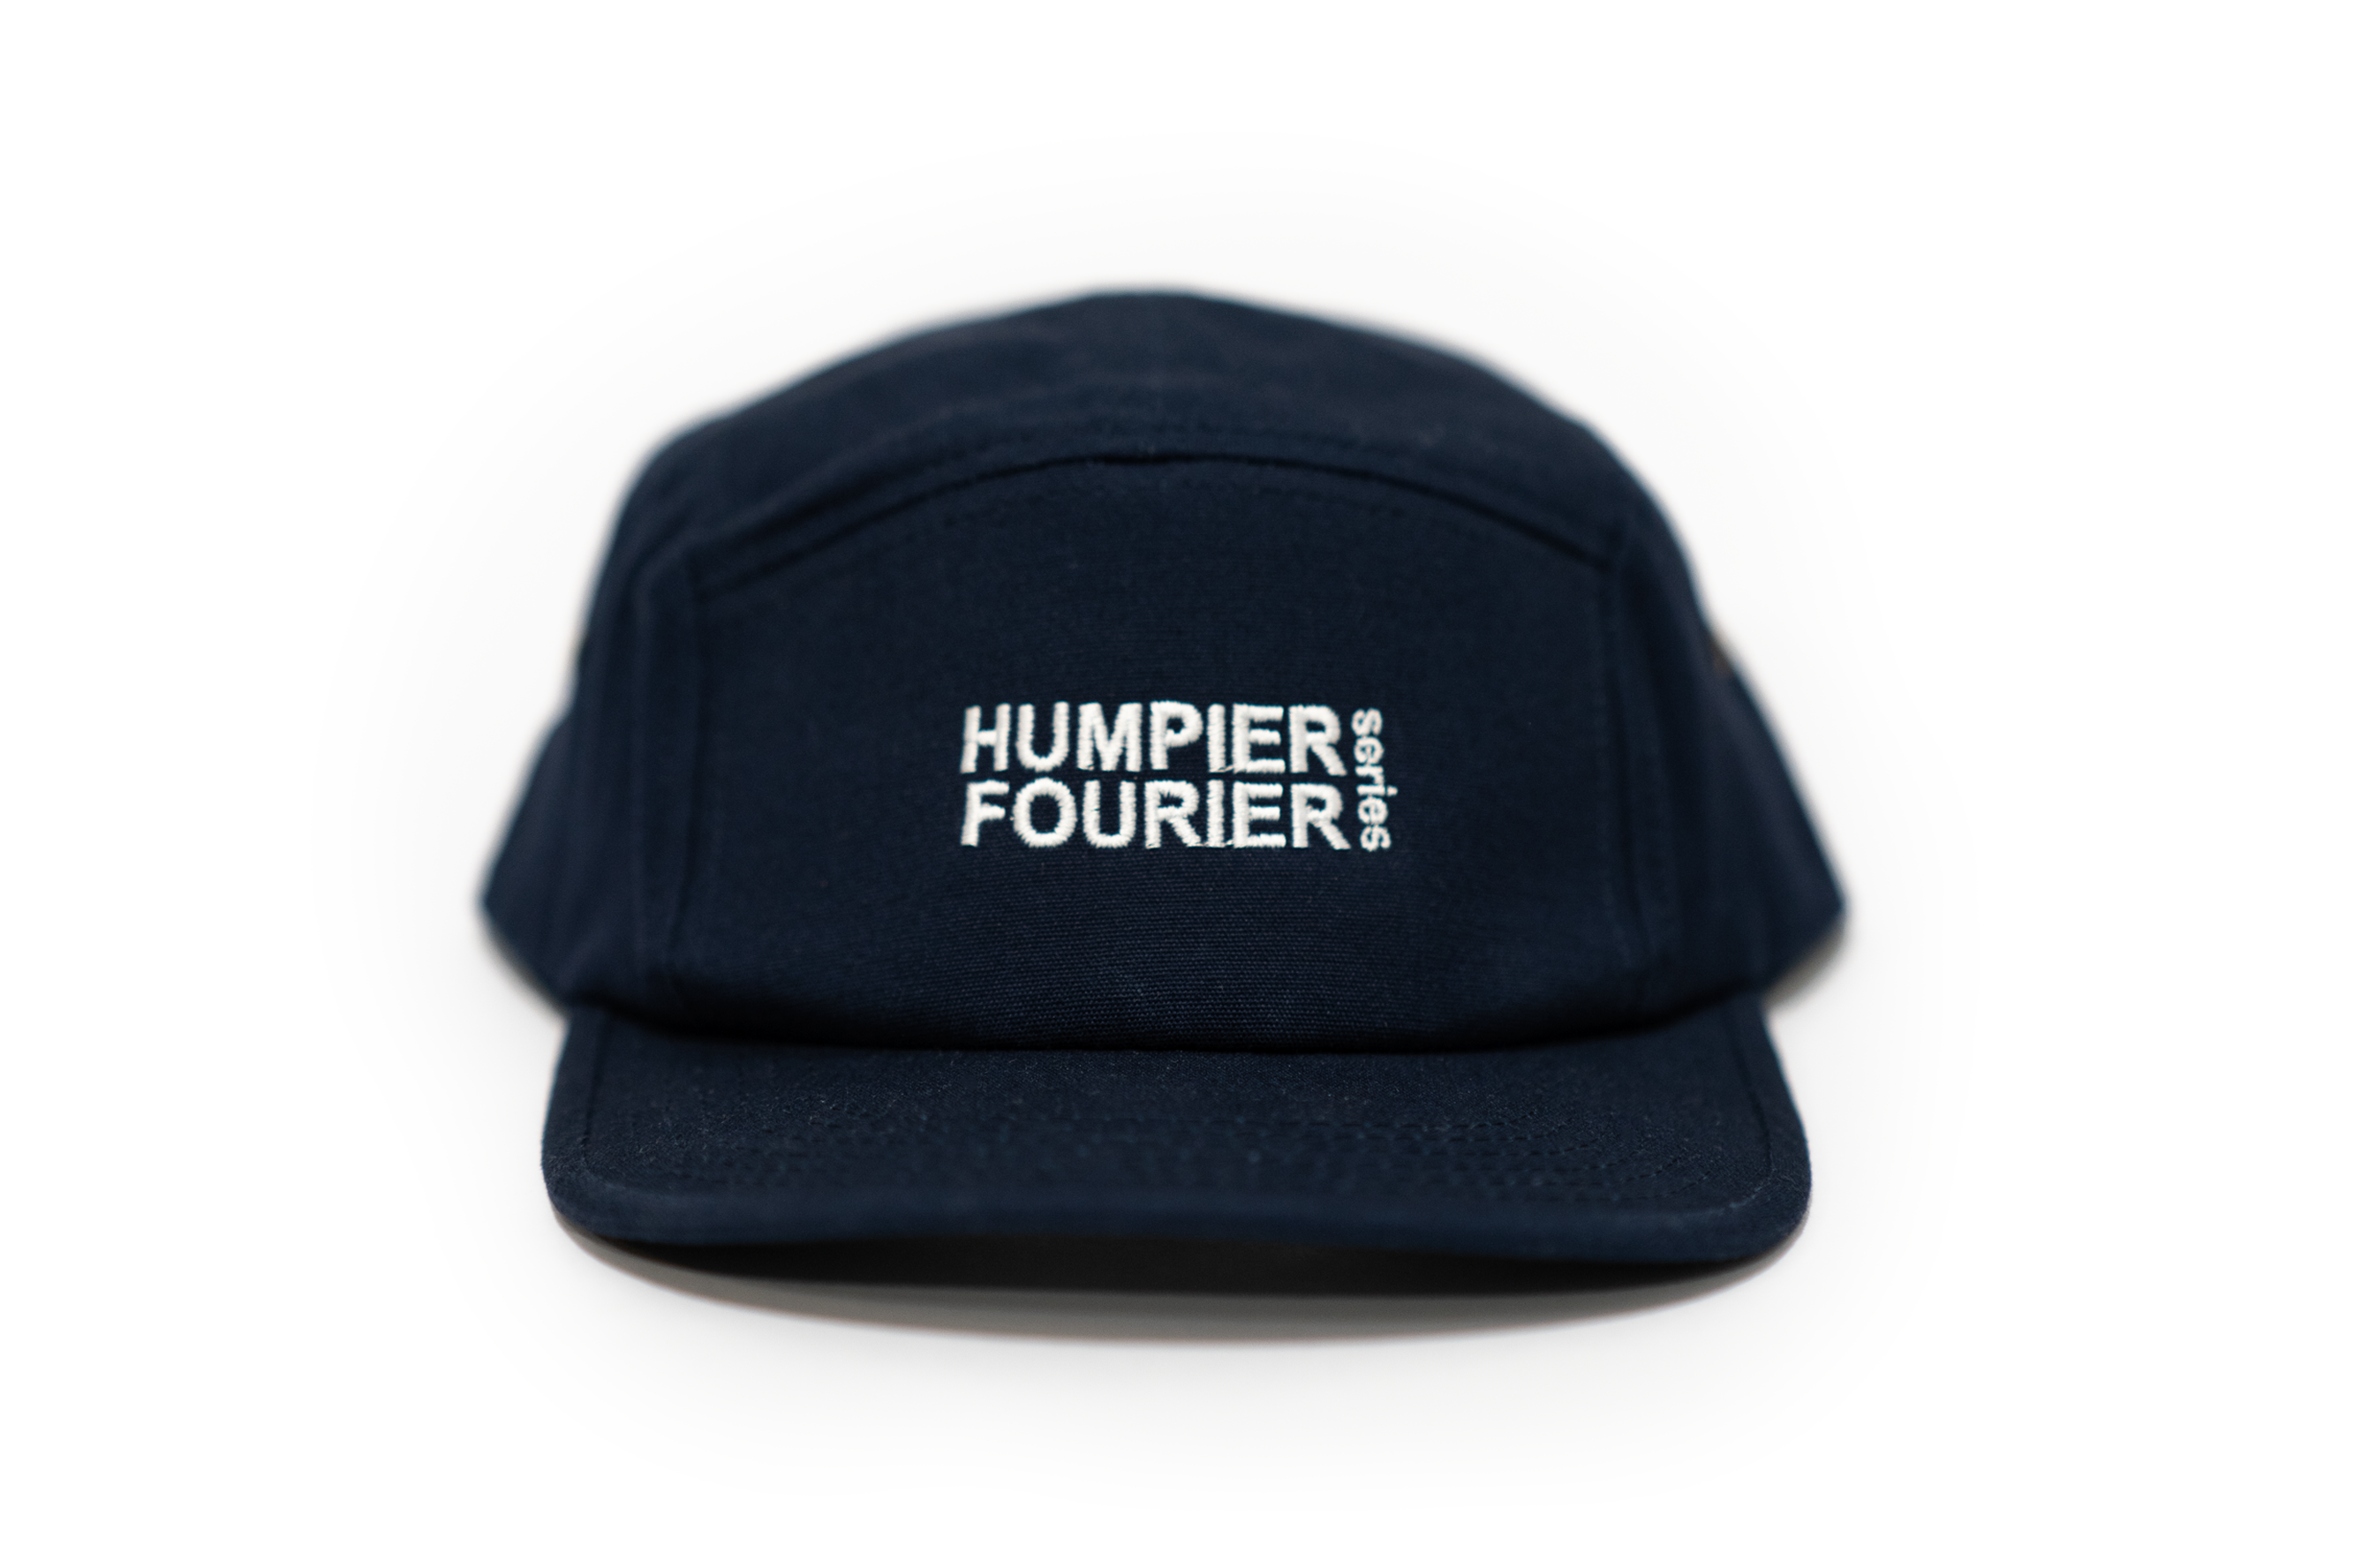 Colaboracion Humpier x Fourier H44FC ciclismo